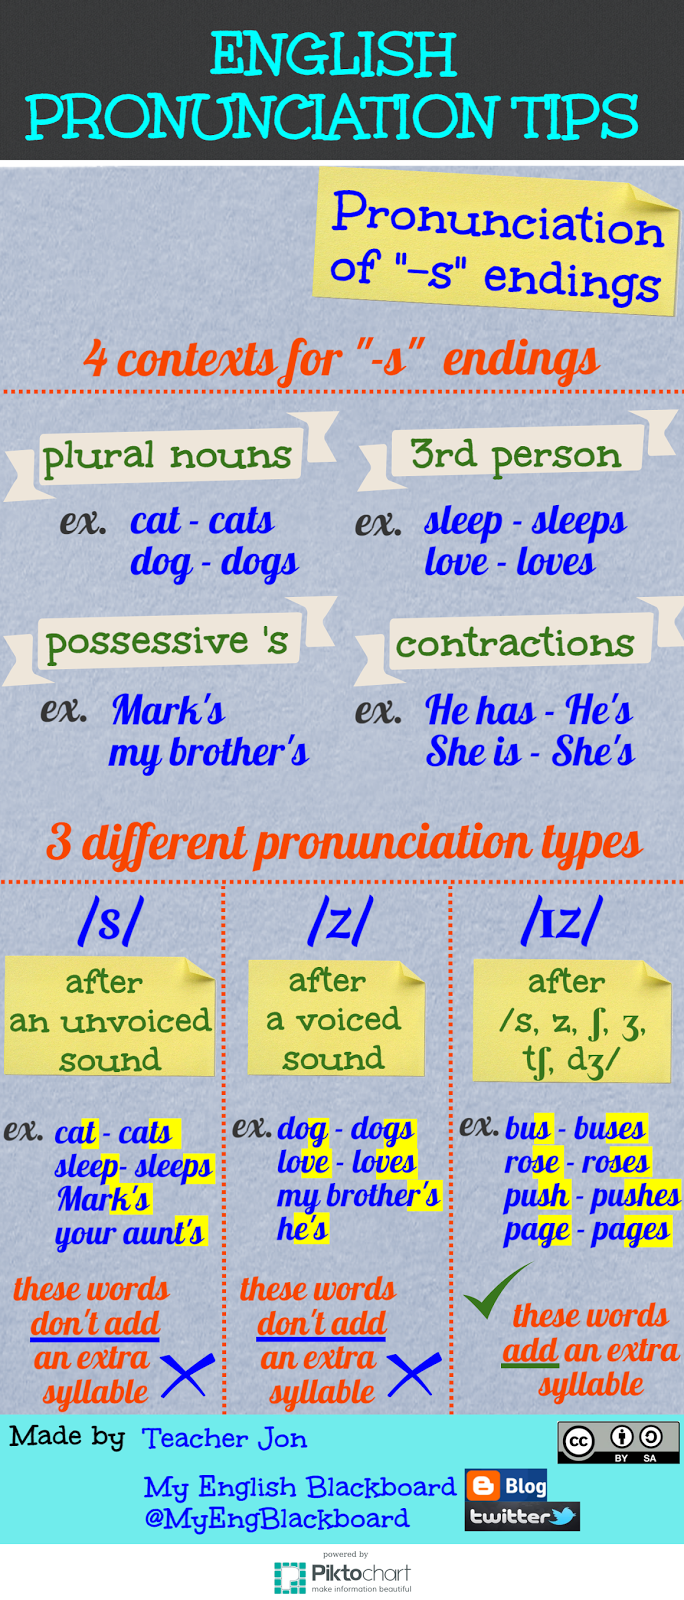 my-english-blackboard-english-pronunciation-tips-pronunciation-of-s-endings